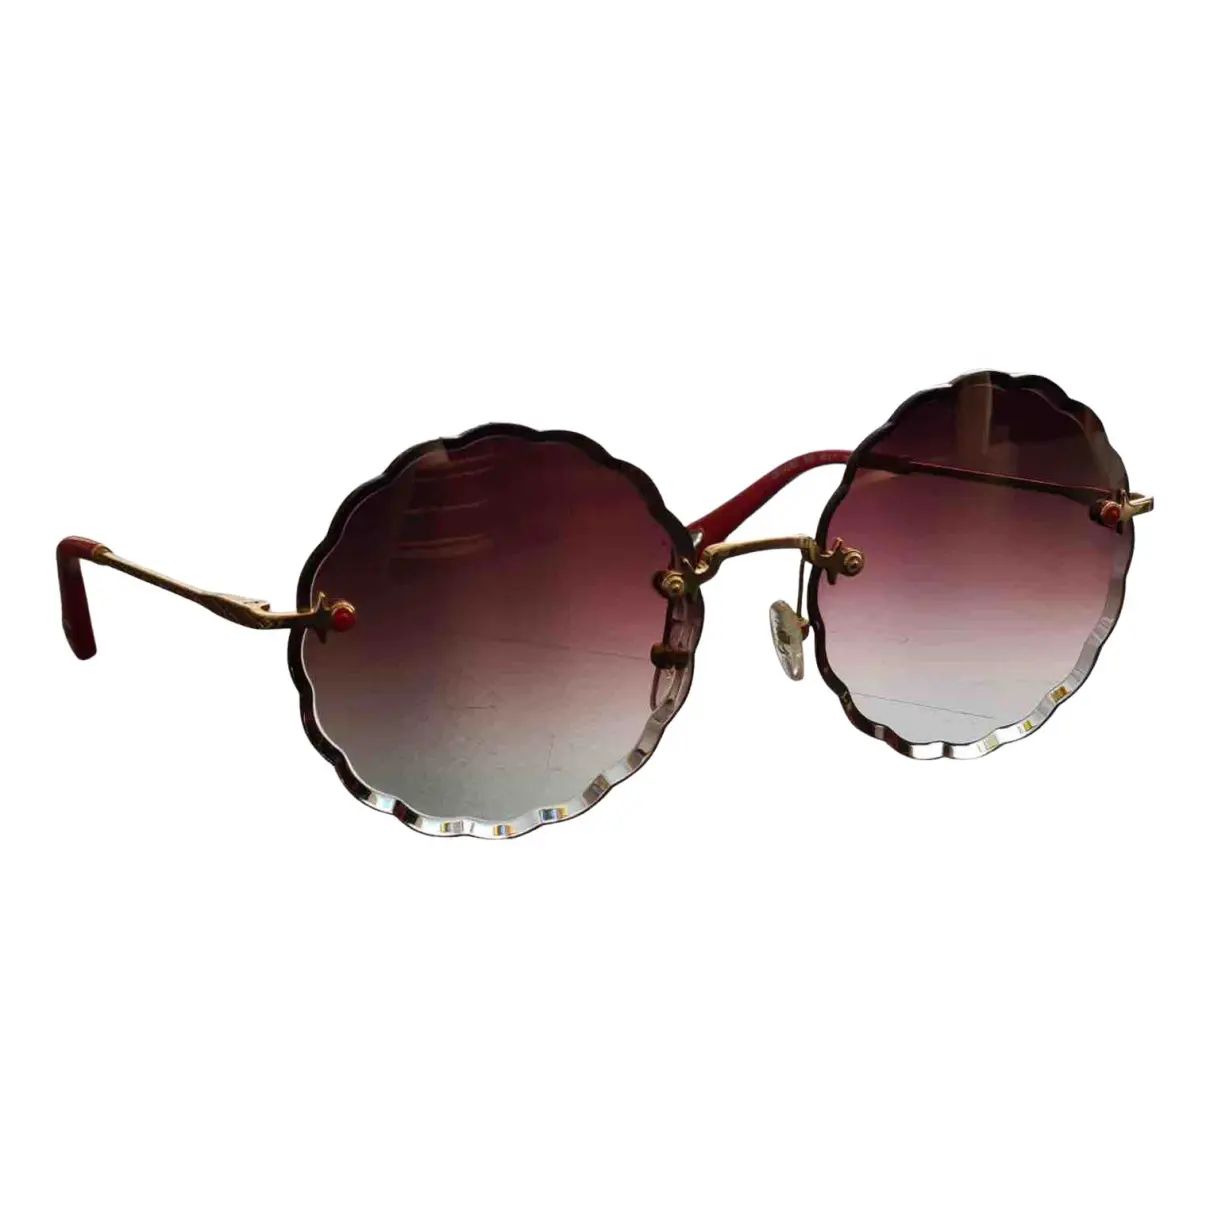 Buy Chloé Rosie oversized sunglasses online